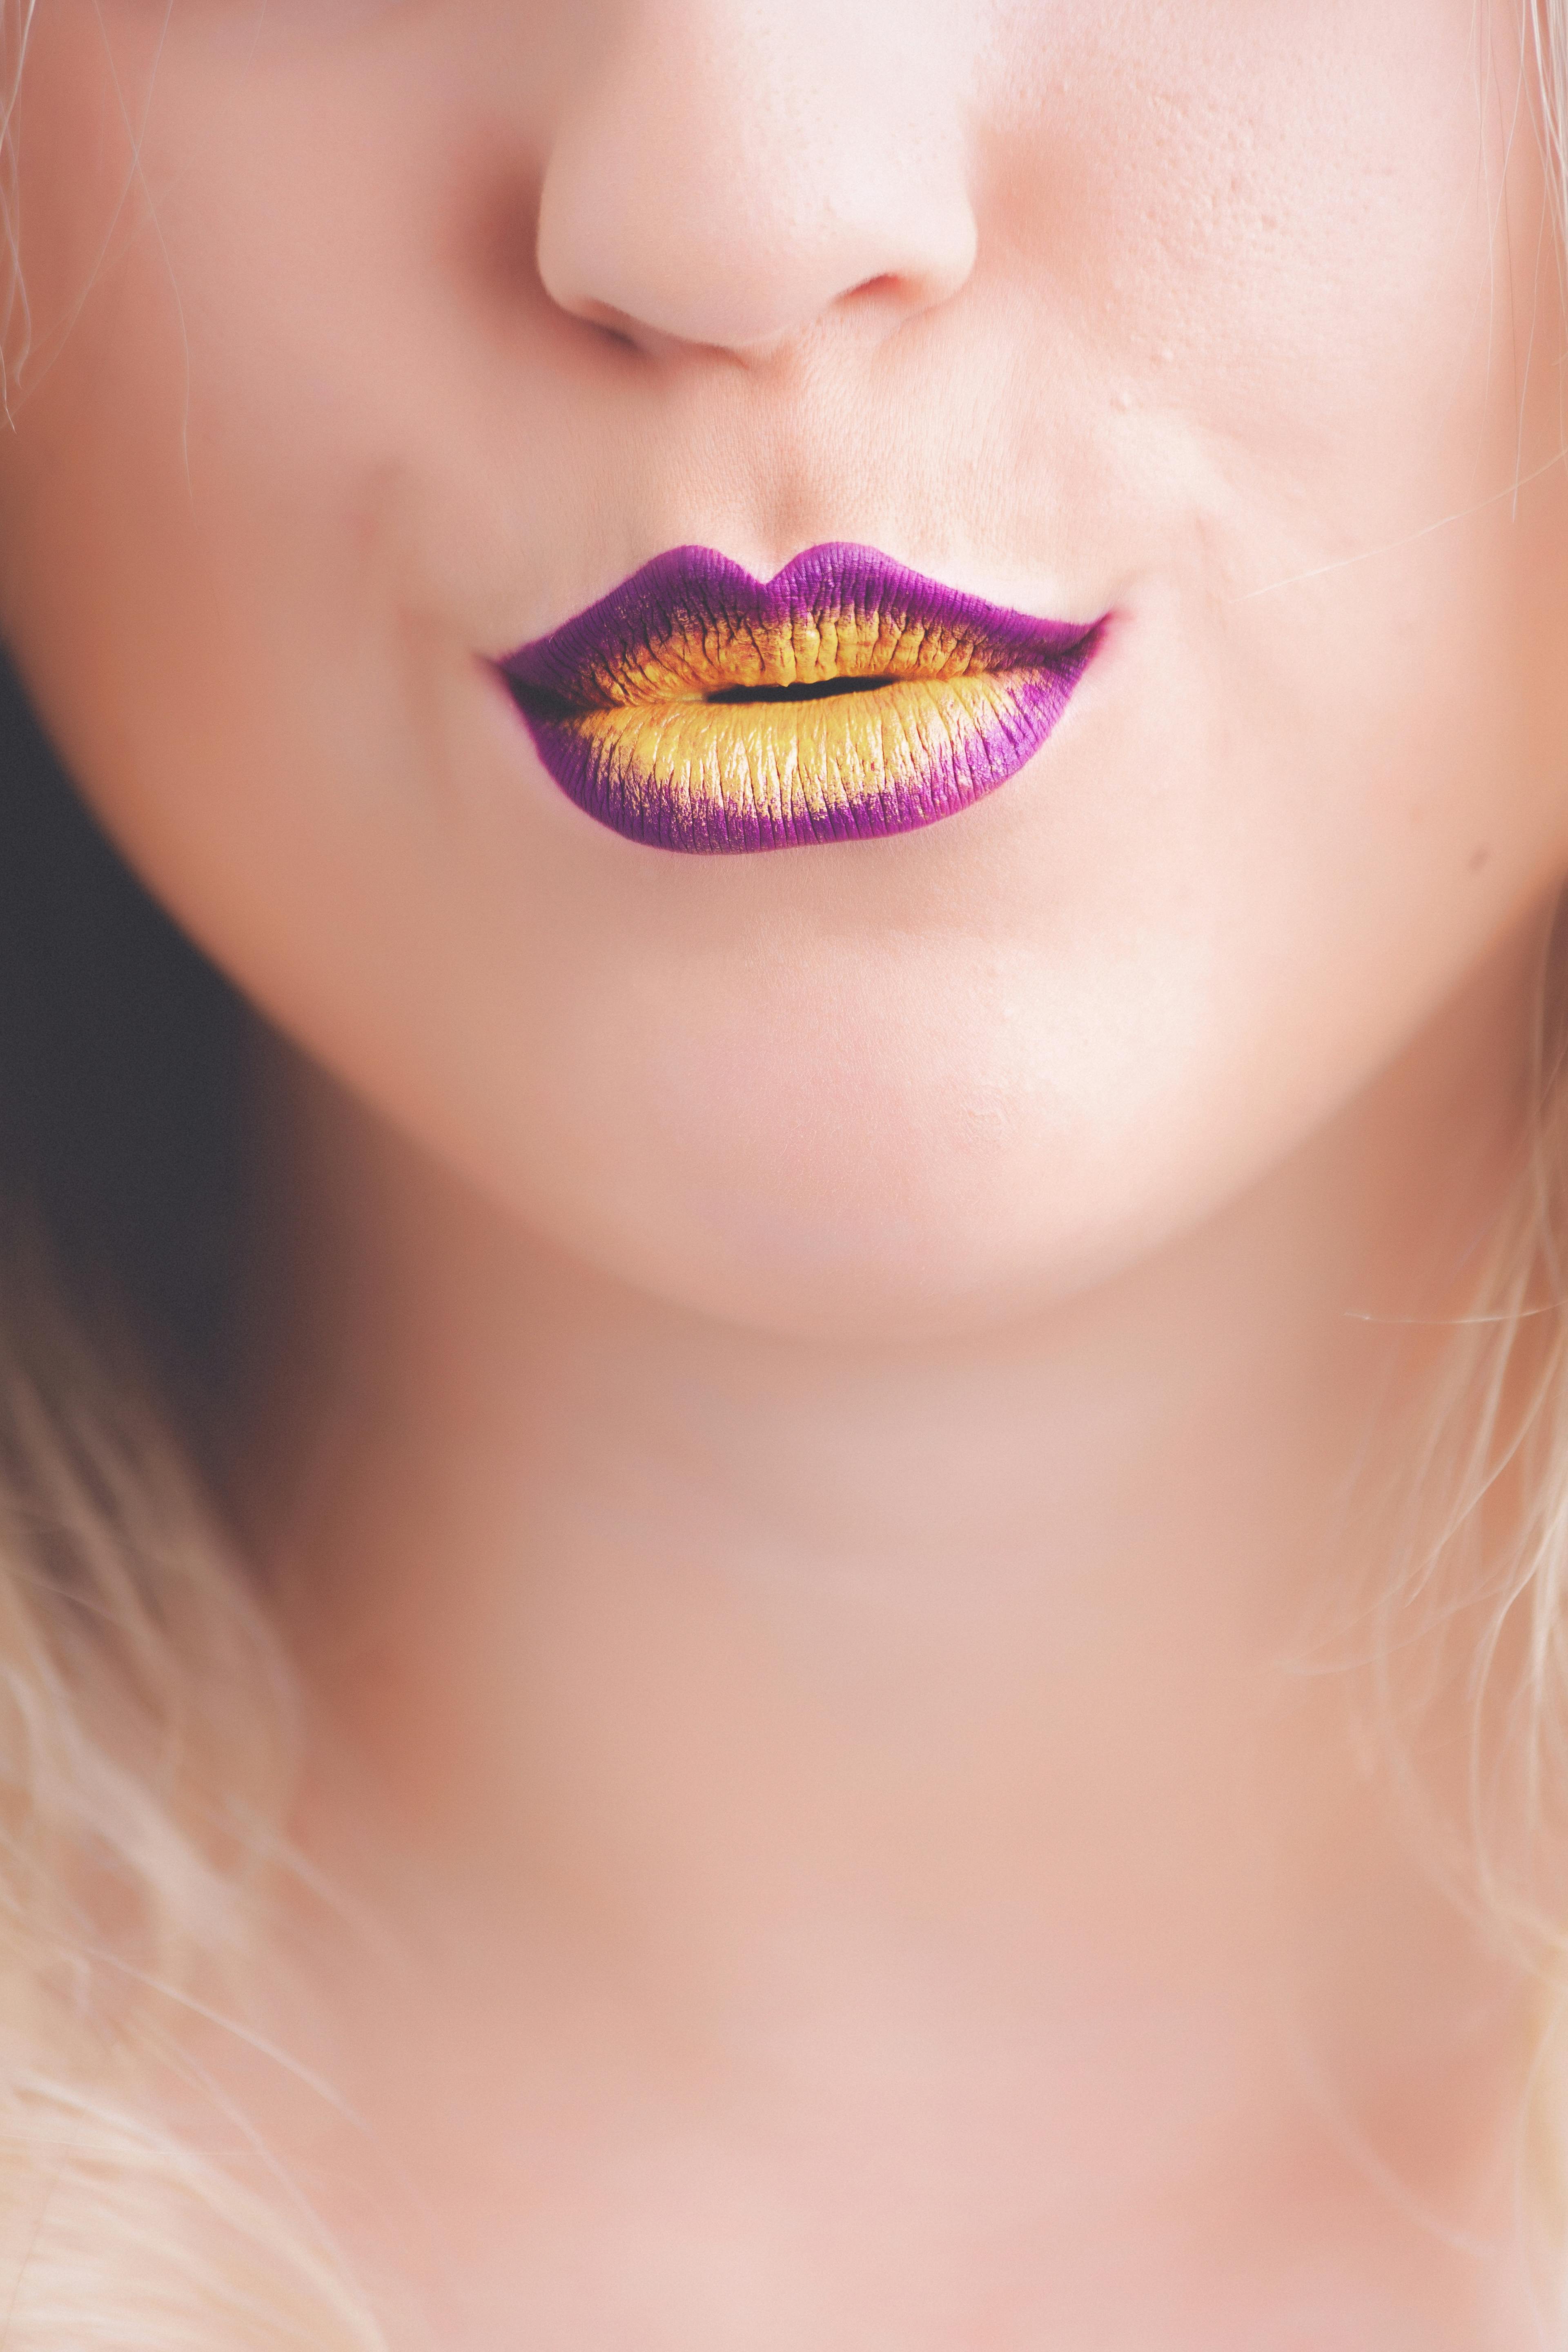 Woman With Black Lipstick and Teal Nail Polish \u00b7 Free Stock Photo